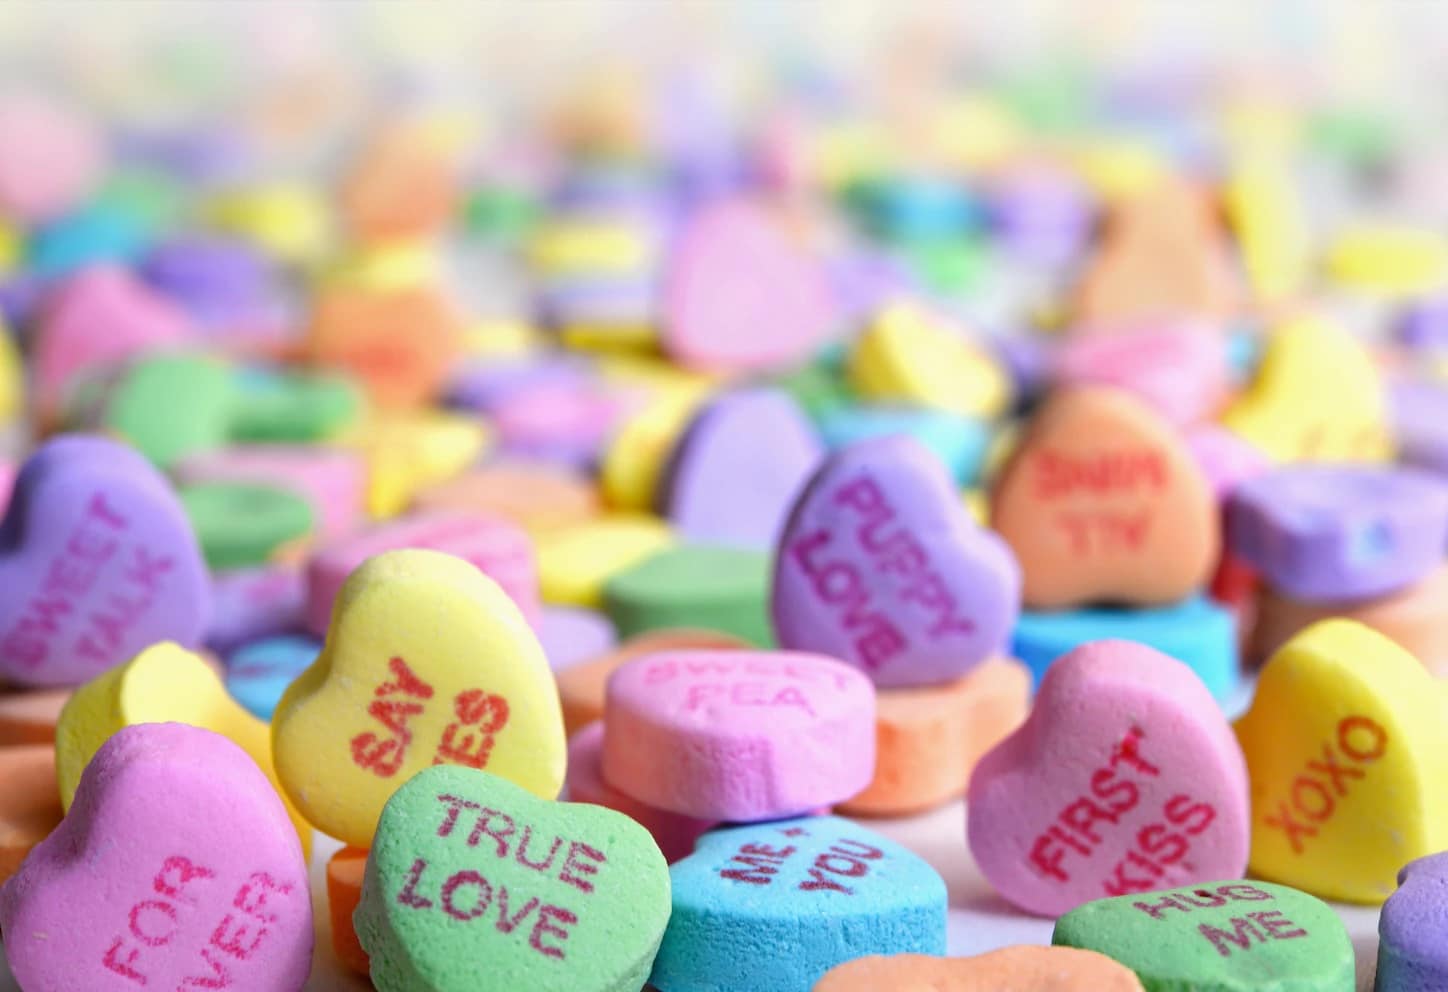 Sweethearts (candy) - Wikipedia